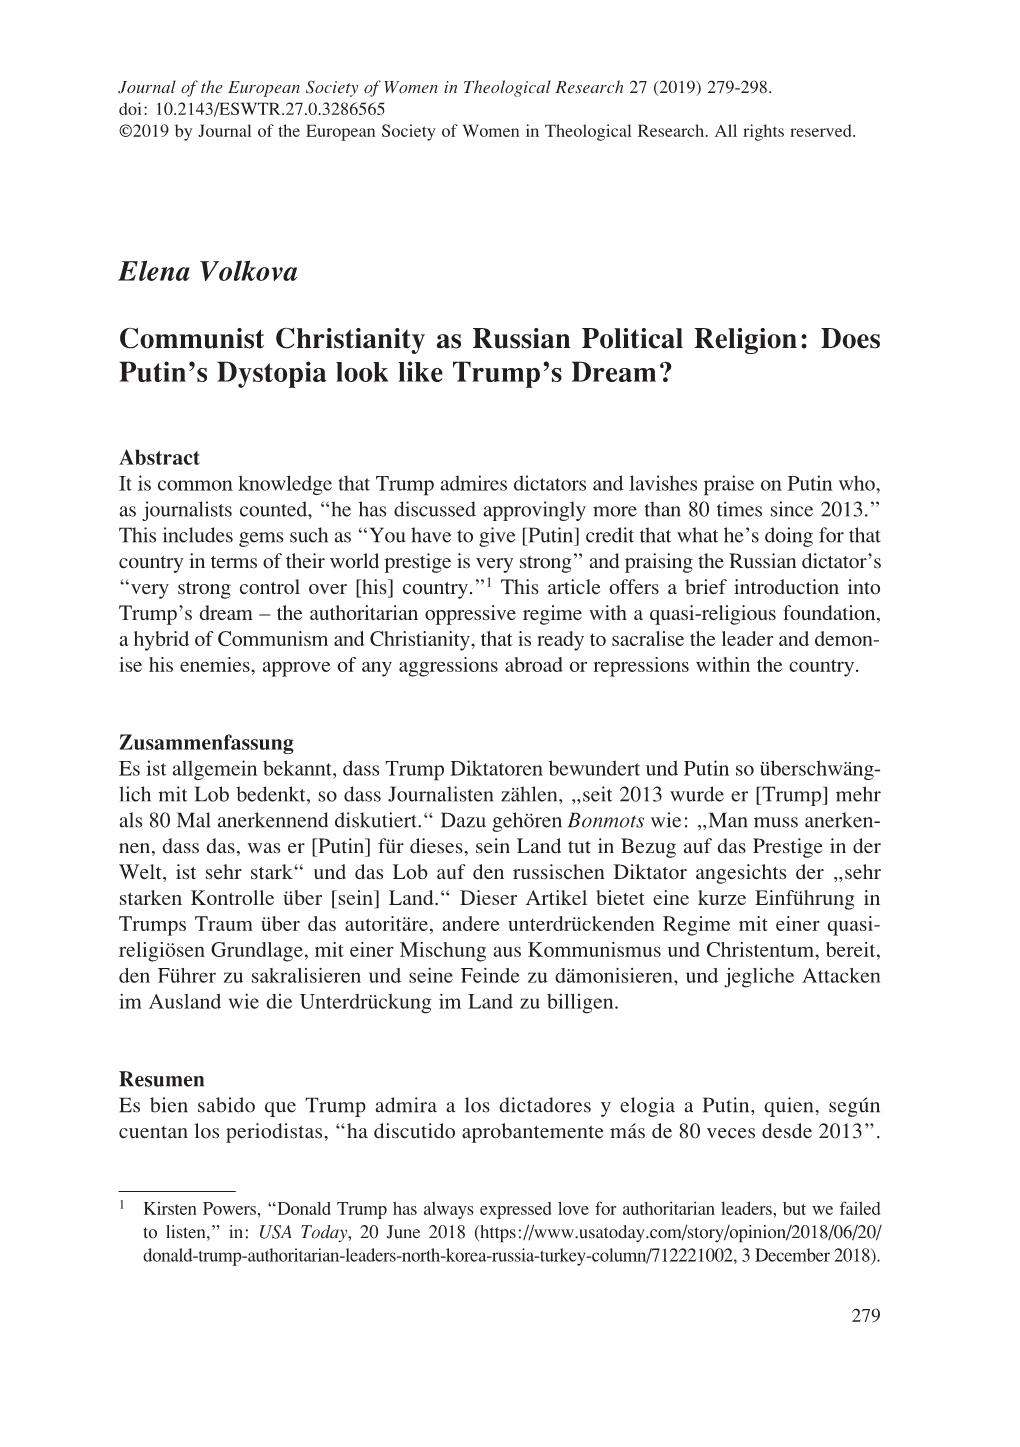 Elena Volkova Communist Christianity As Russian Political Religion: Does Putin's Dystopia Look Like Trump's Dream?